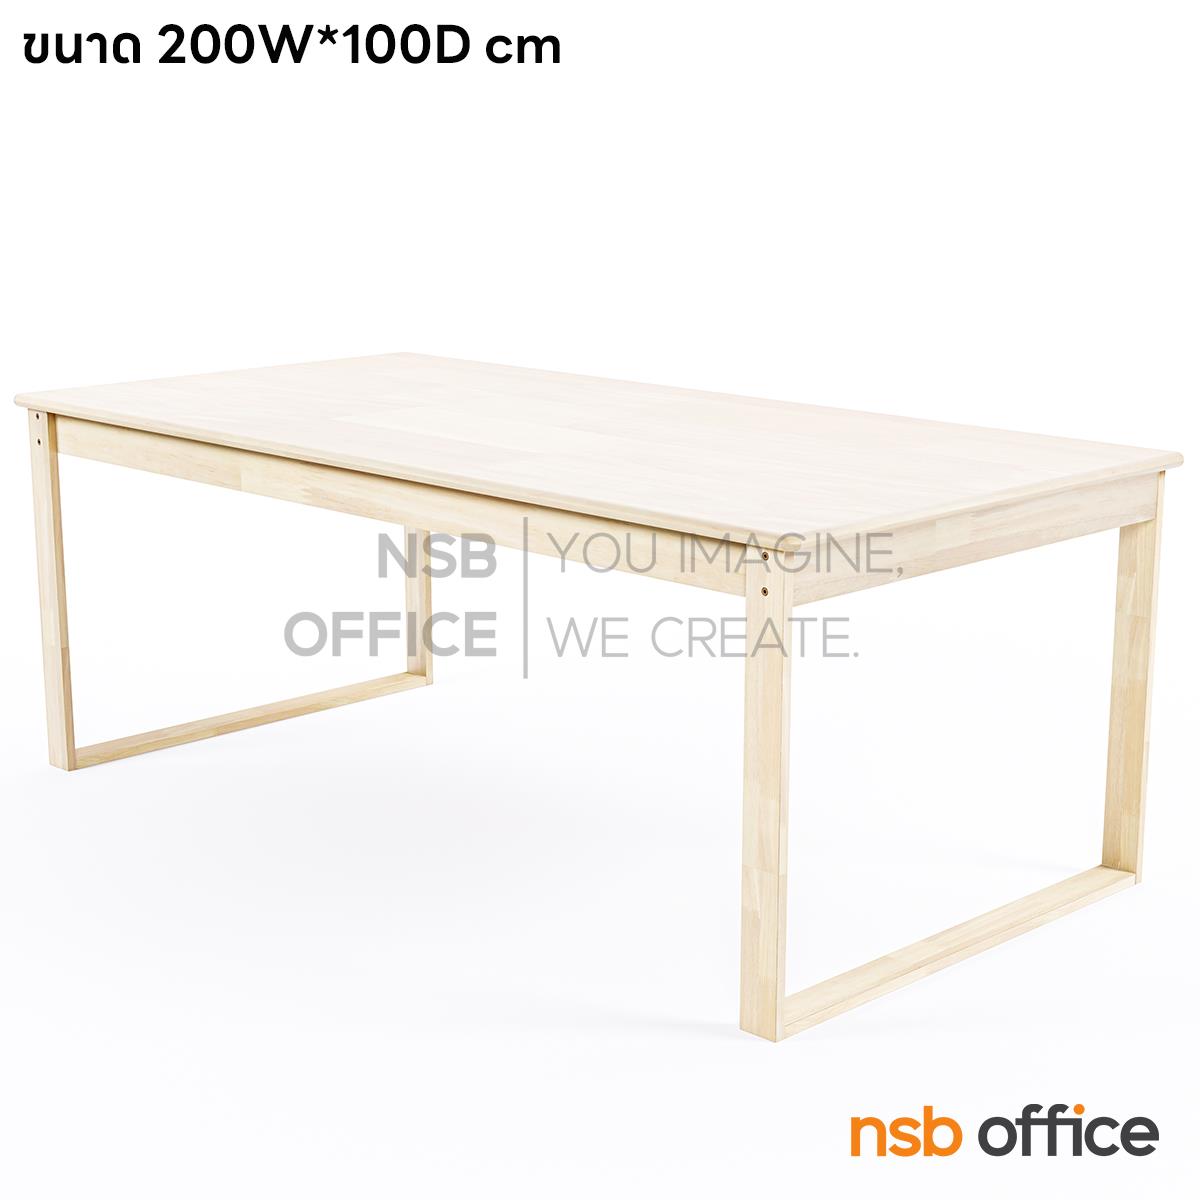 A08A025:โต๊ะประชุมหน้าไม้ยางพารา รุ่น Prisy (พริสซี) ขนาด 200W*100D และ 240W*120D  cm. 